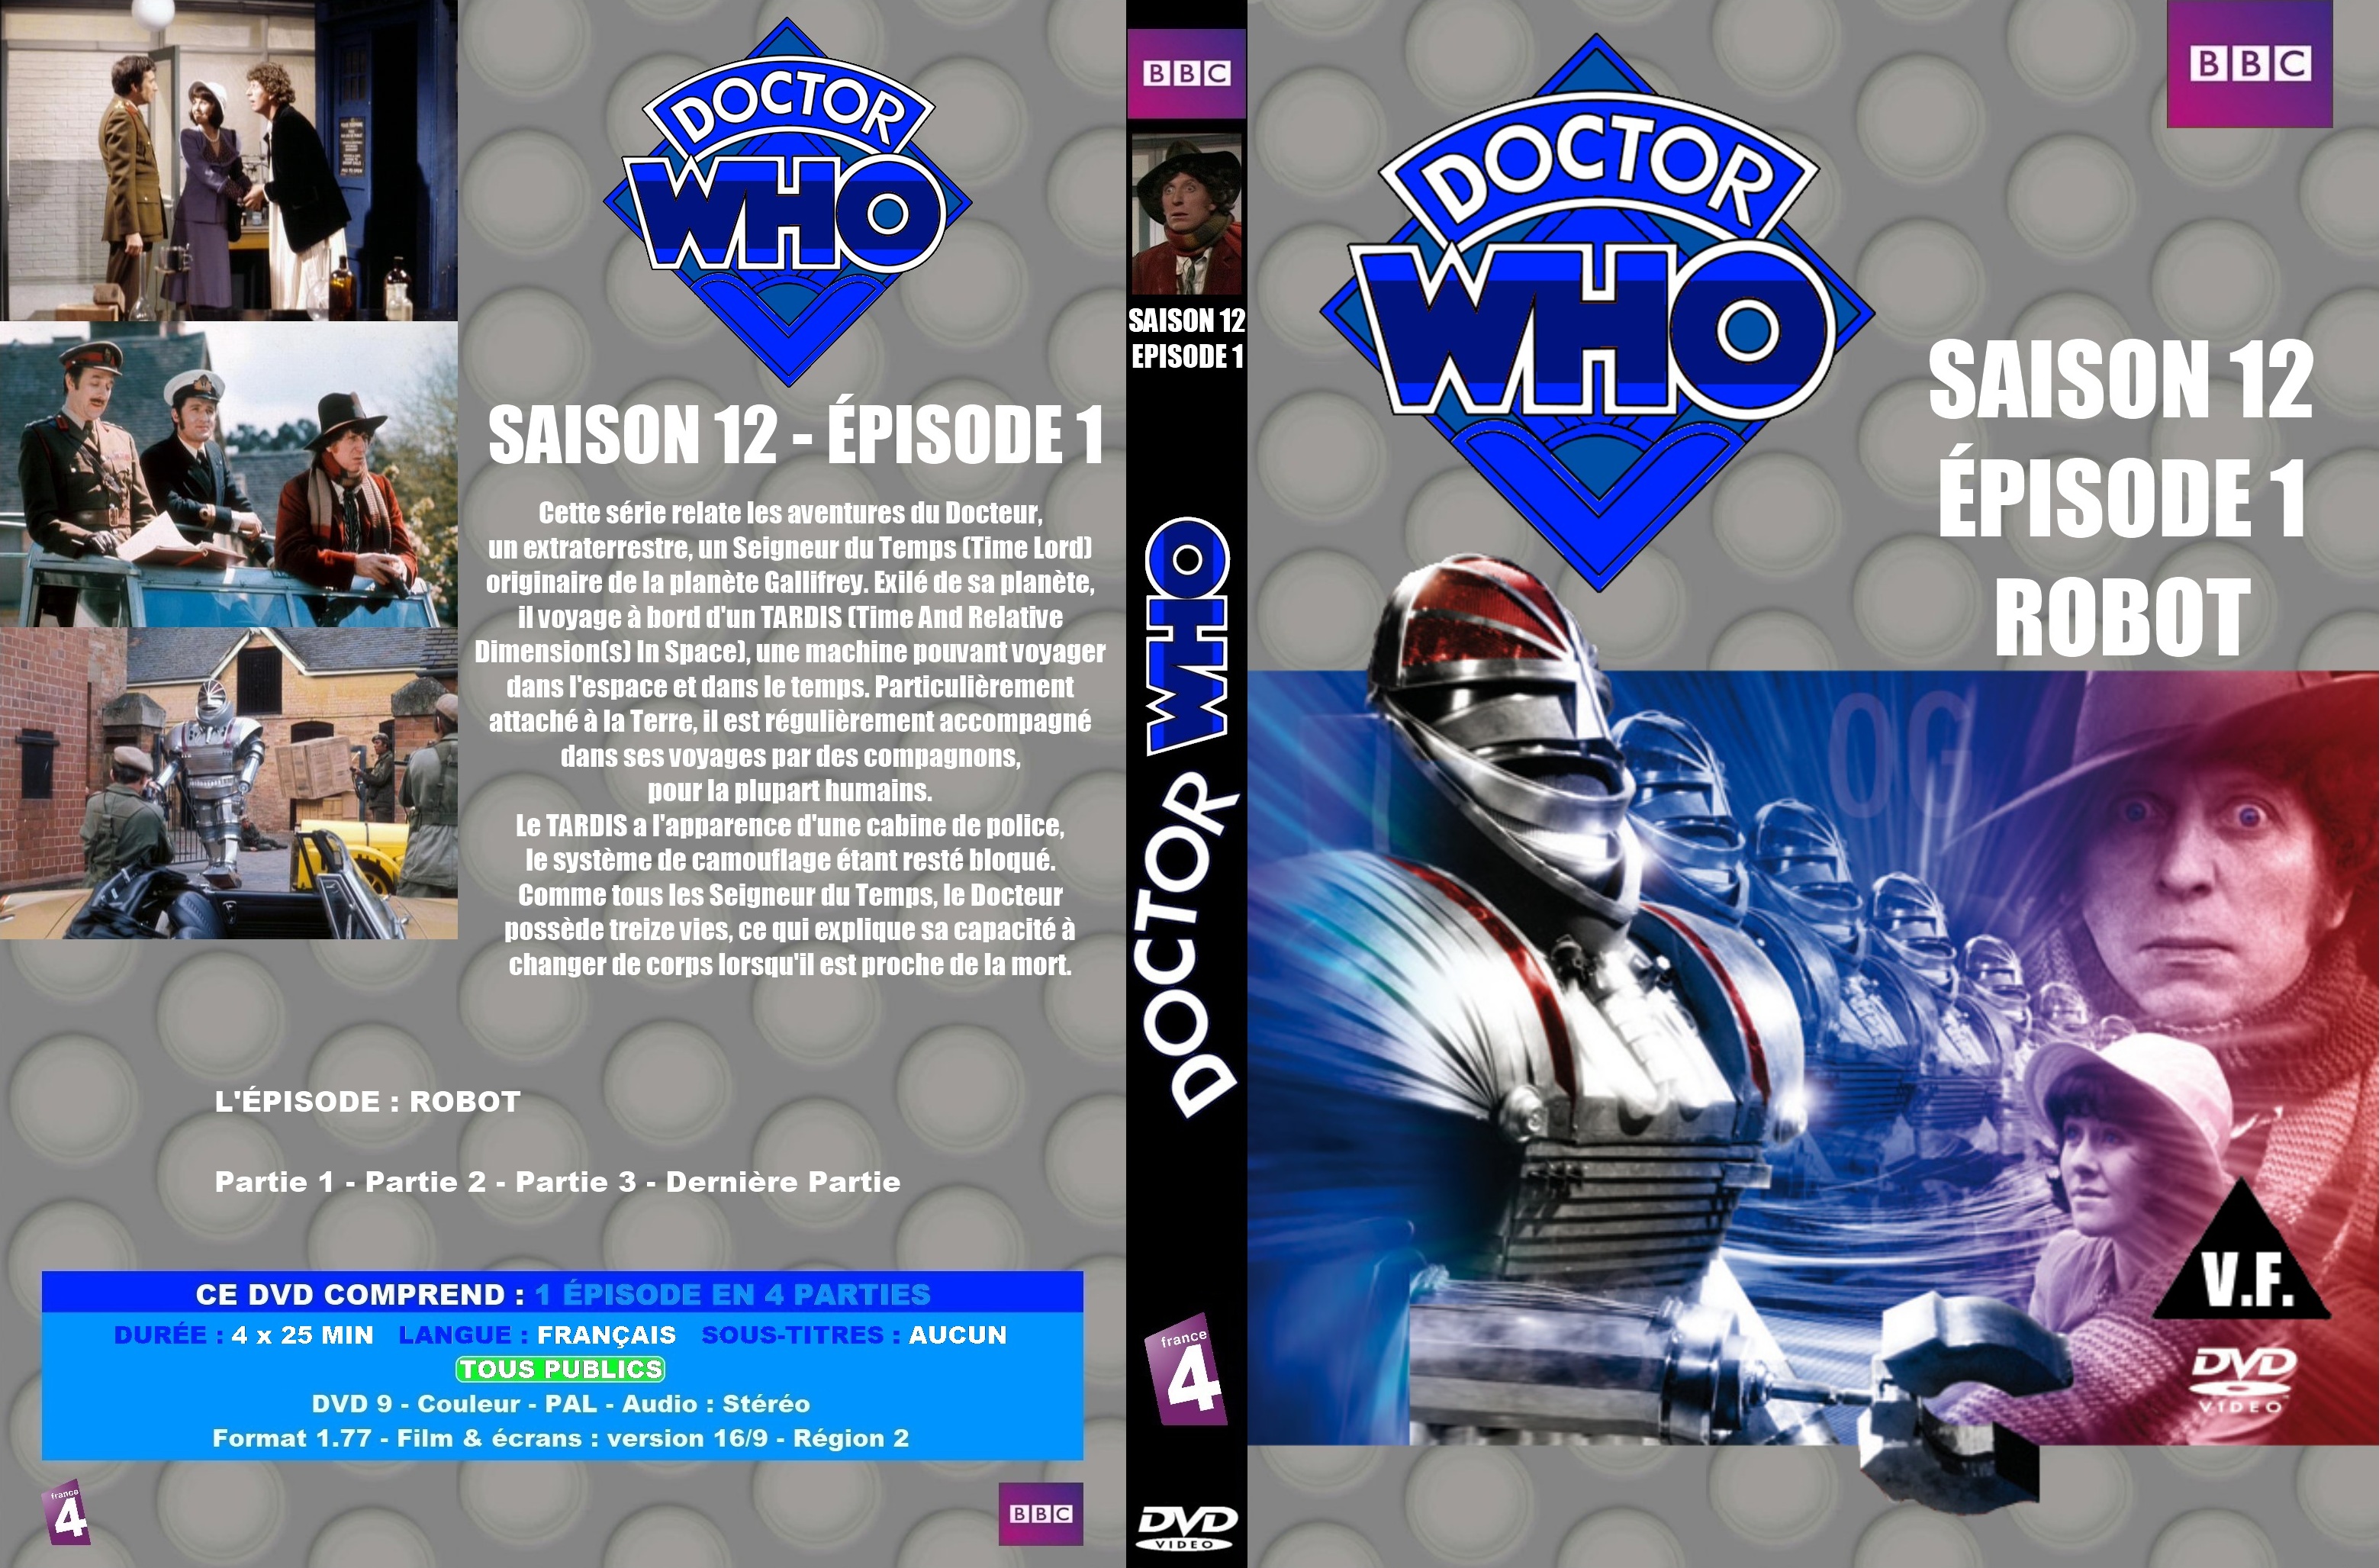 Jaquette DVD Doctor Who Classic Saison 12 pisode 1 custom